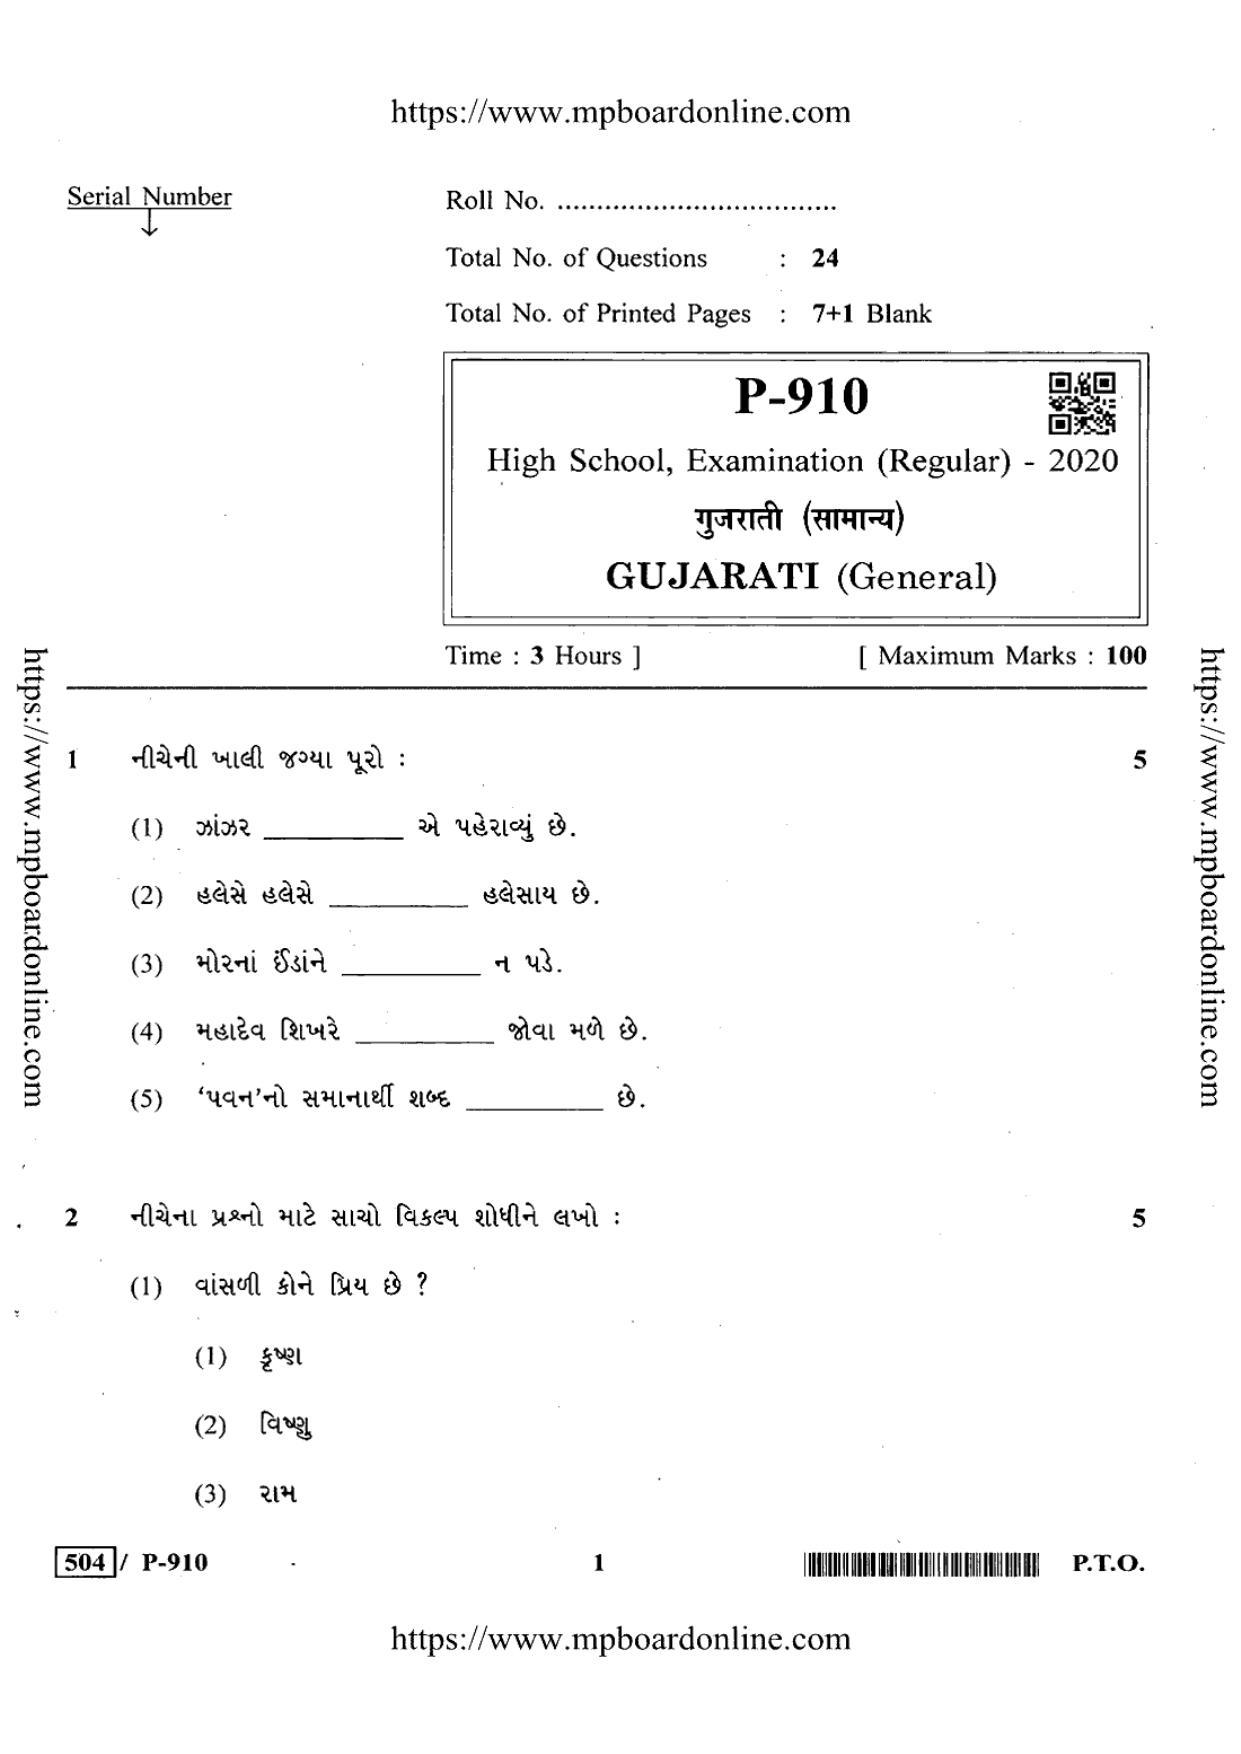 MP Board Class 10 Gujrat General 2020 Question Paper - Page 1